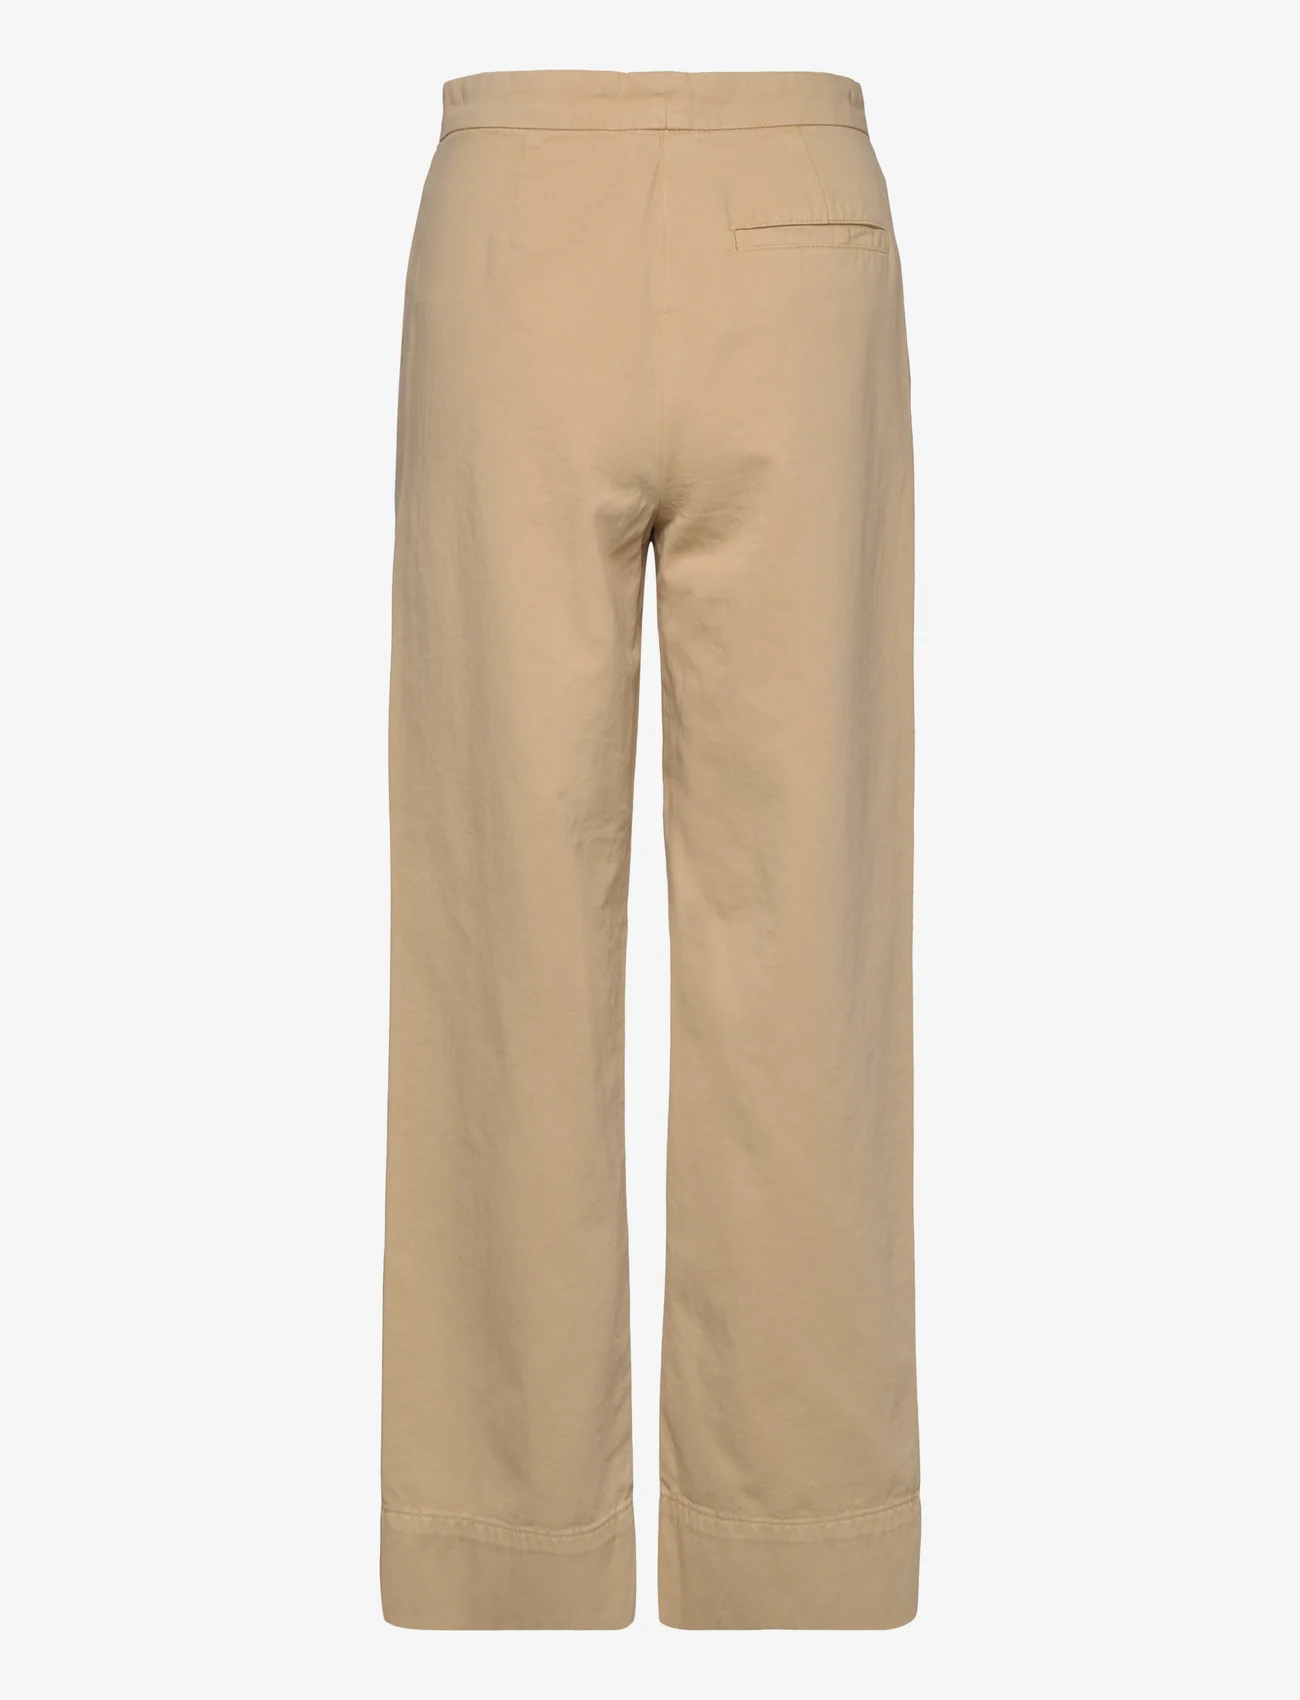 Marimekko - GAIJU SOLID - straight leg trousers - beige - 1